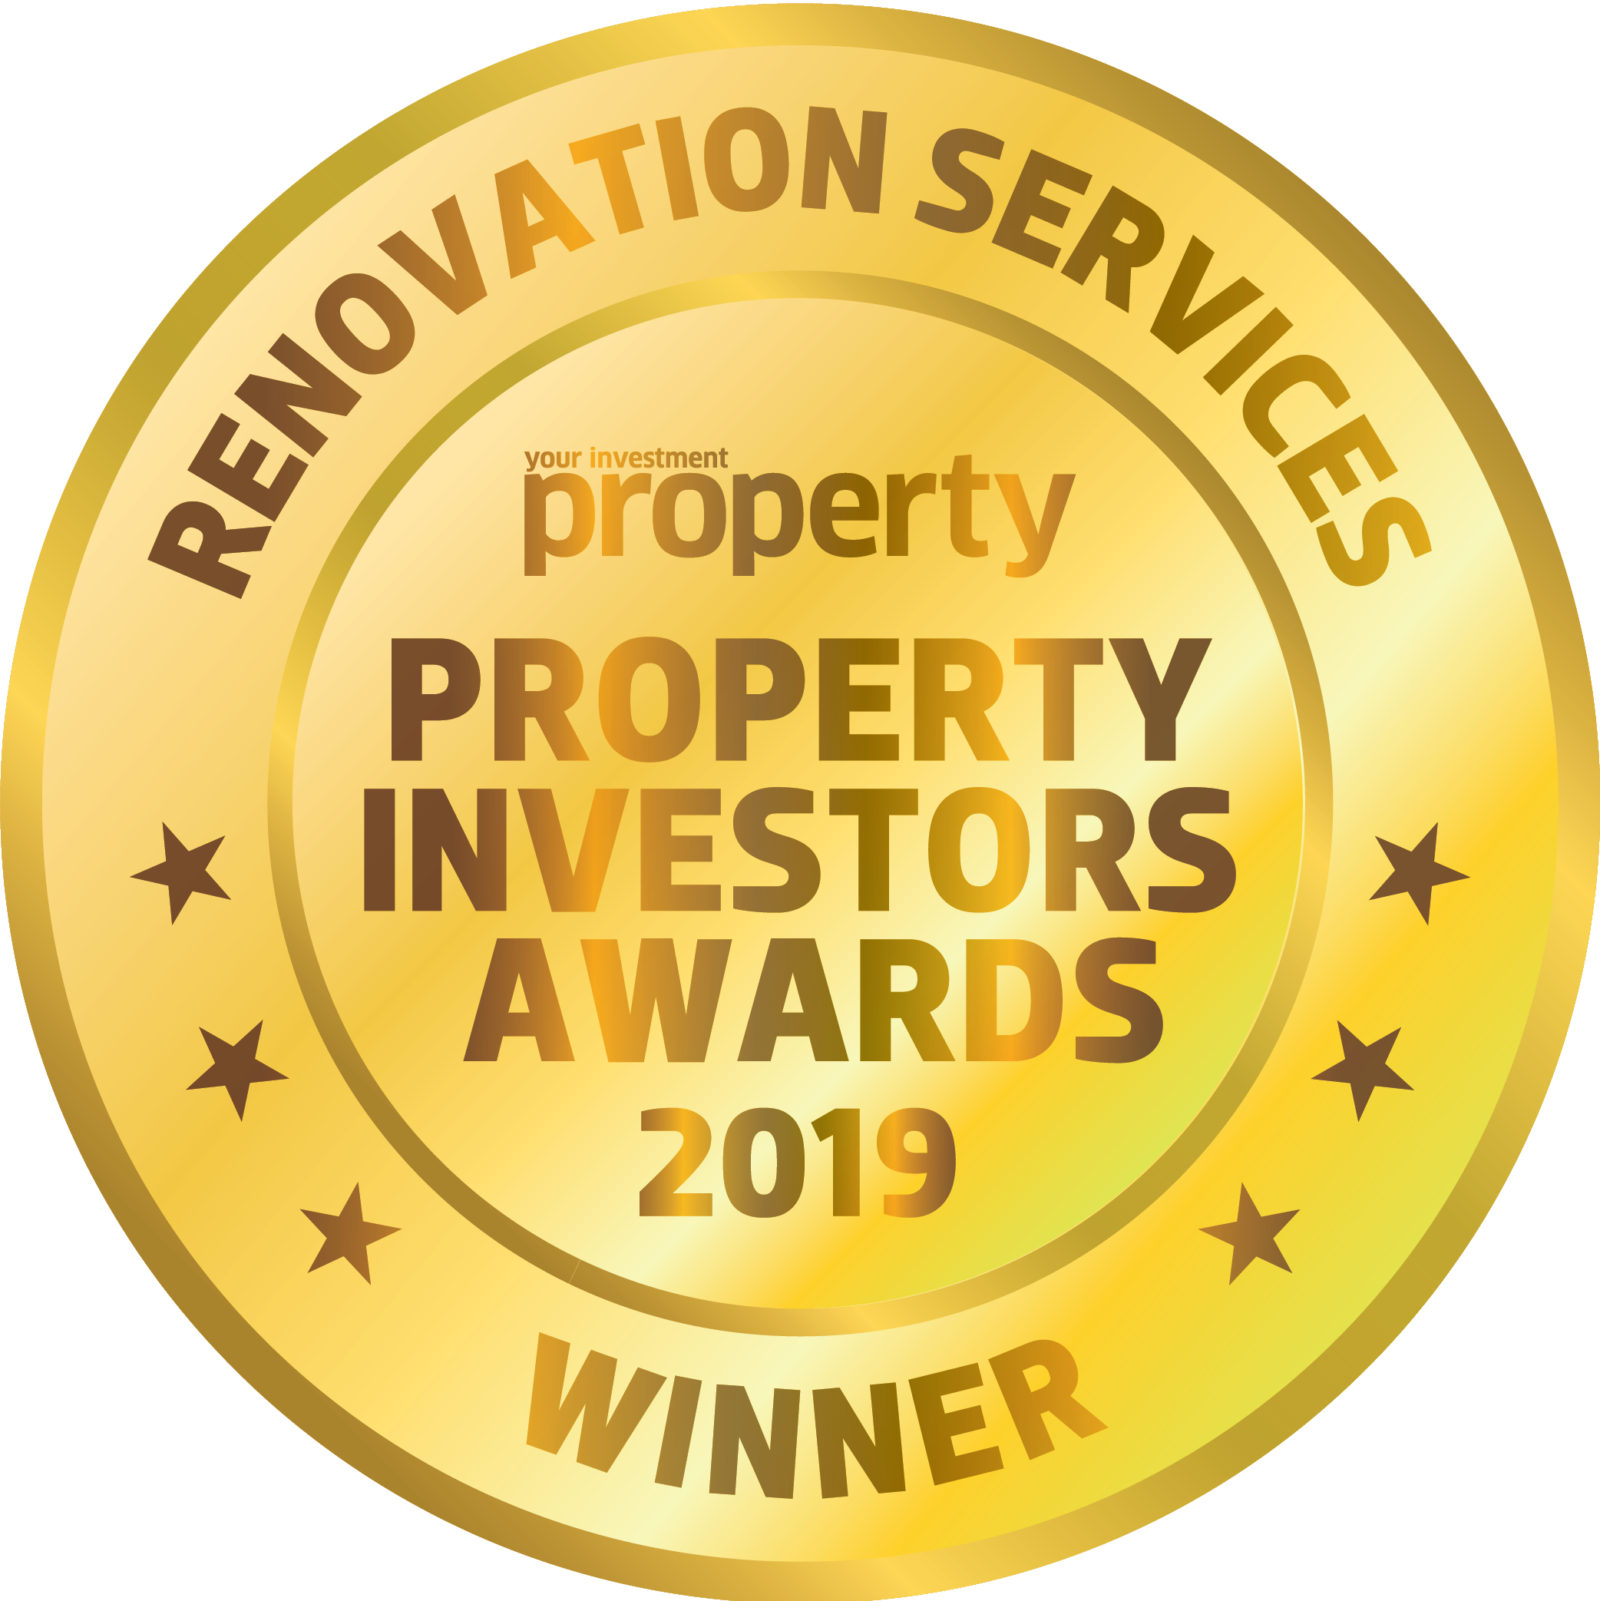 Winner of Property Investors Awards for ‘Renovation Services’